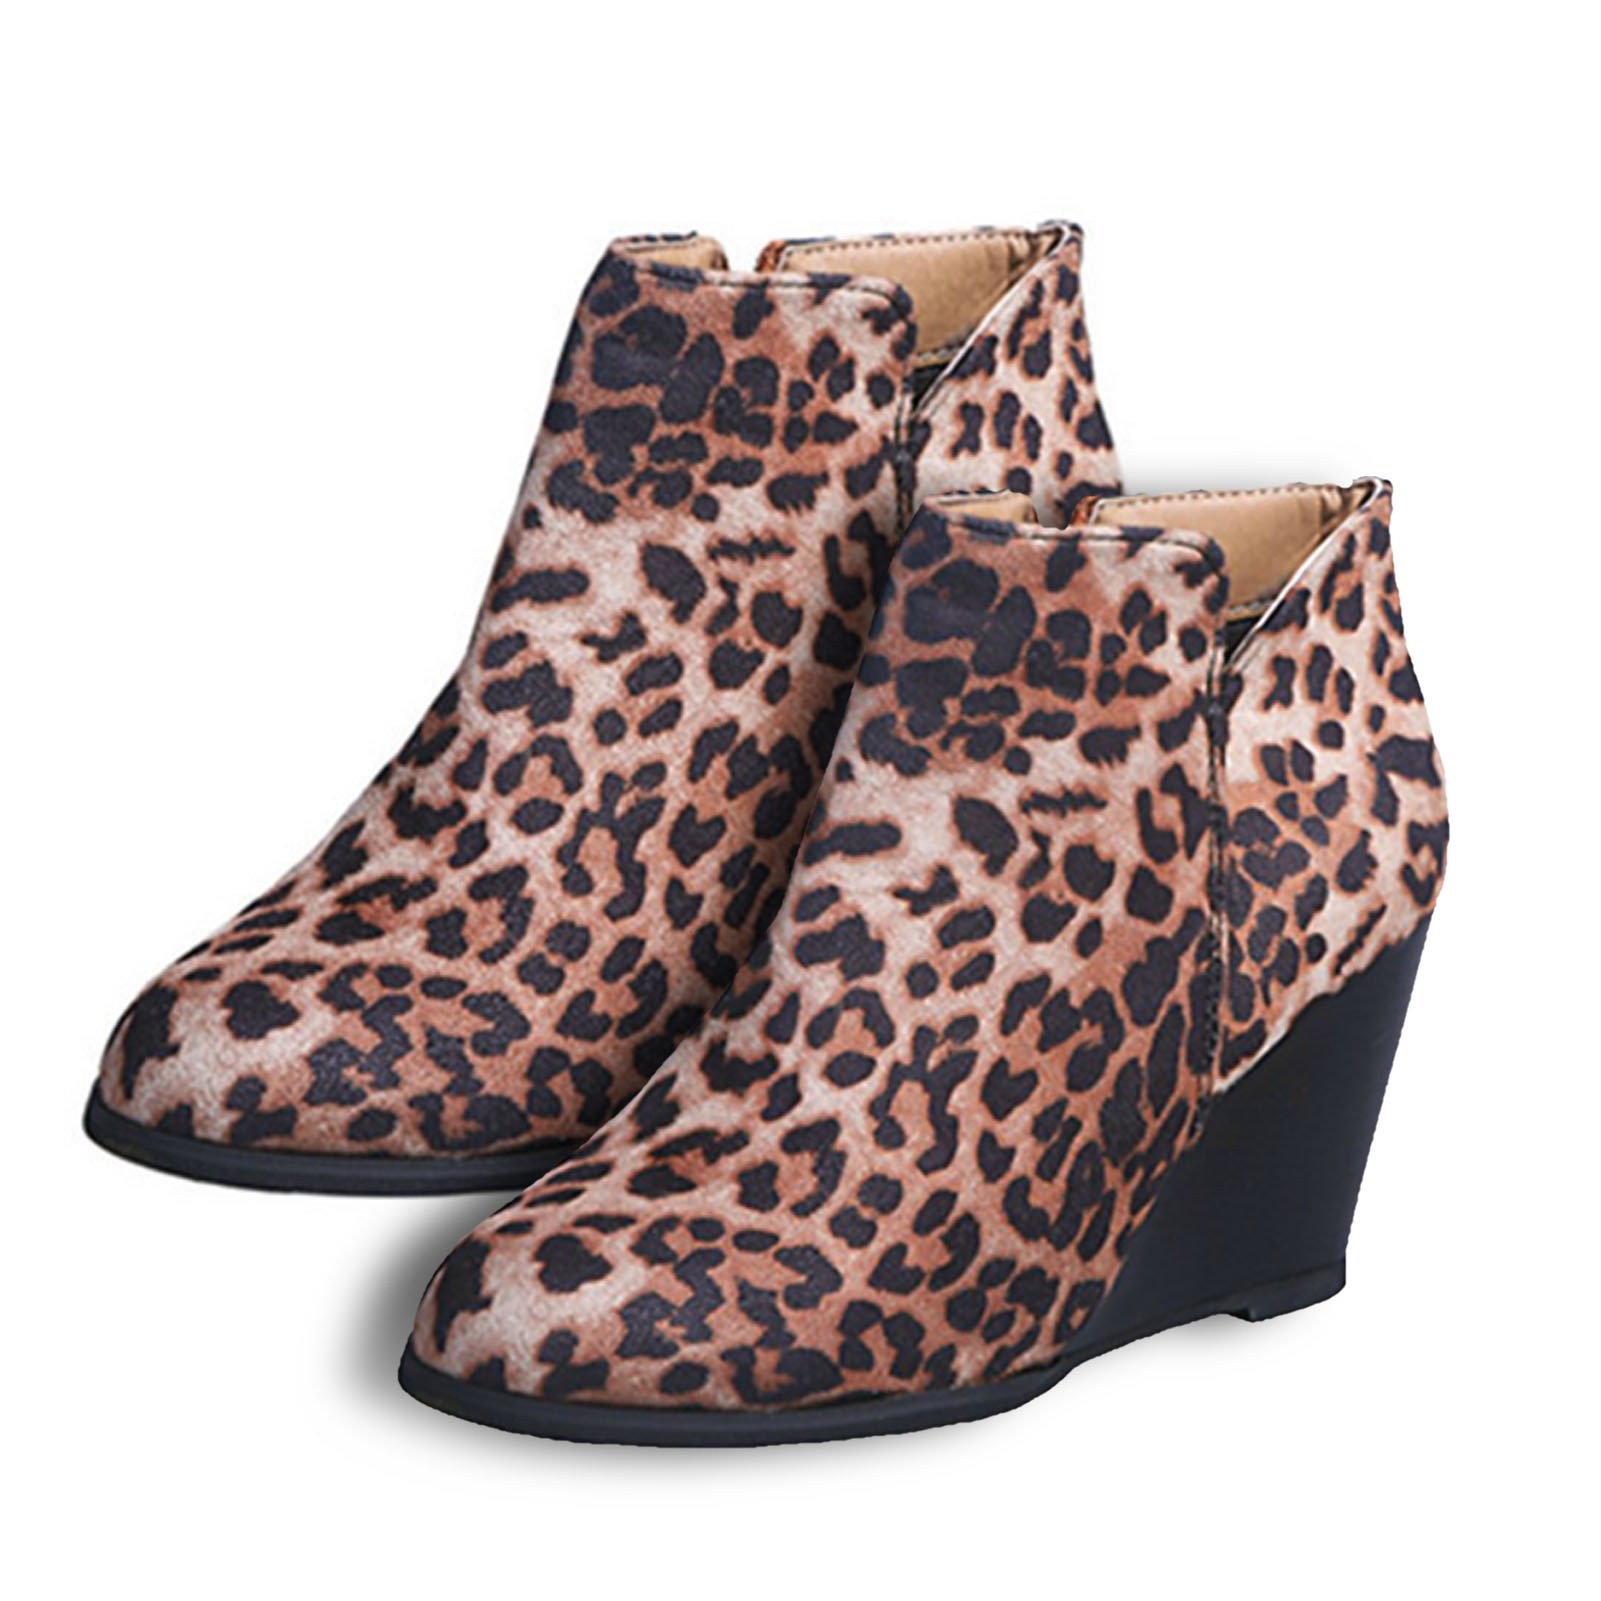 Women Autumn Winter Warm Closed Toe Side Zipper Wedge Suede Ankle Boots Shoes - leopard, 41